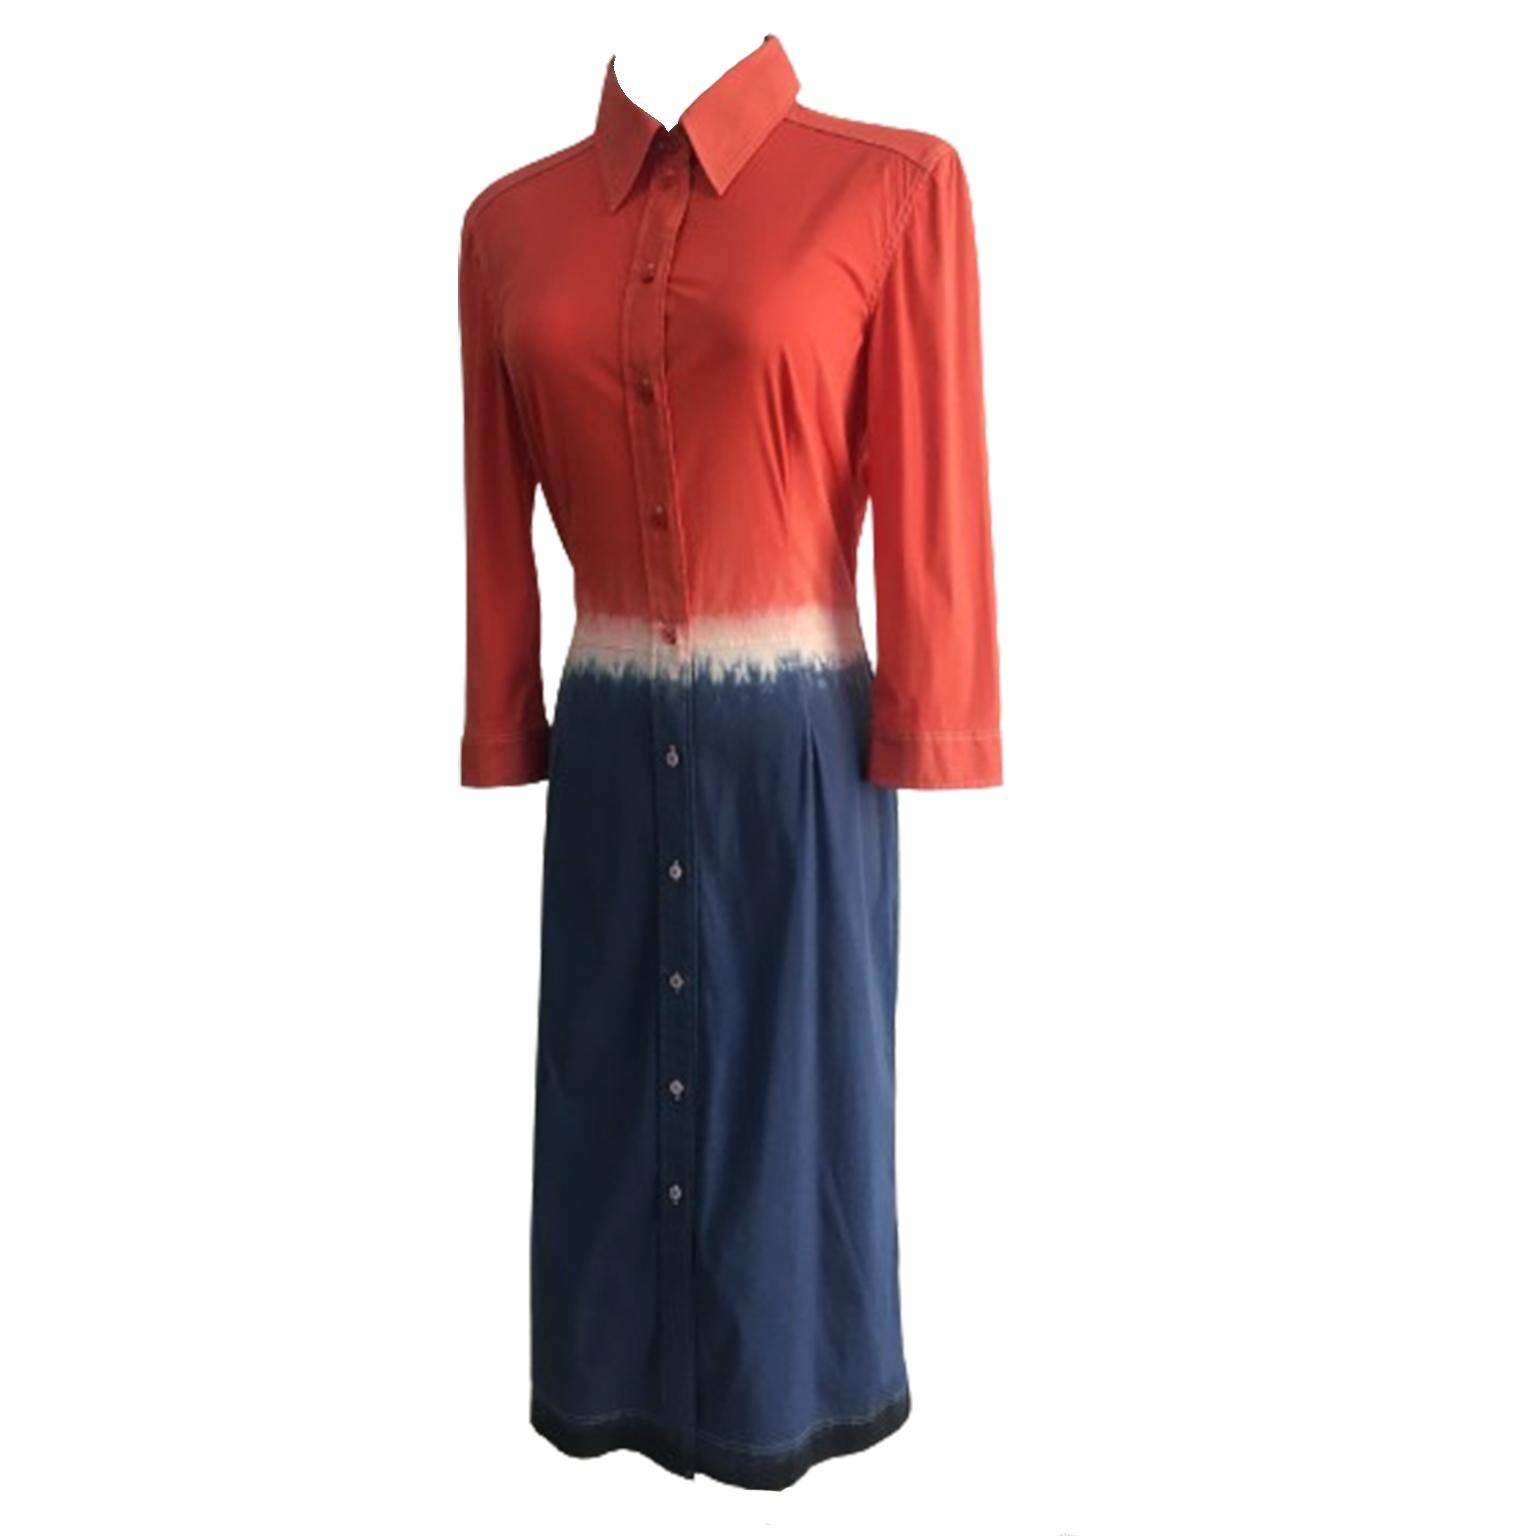 Prada iconic tie dye shirt dress from ss 2004.
Elastic material beautiful cut. 
Size : 40 (it)
